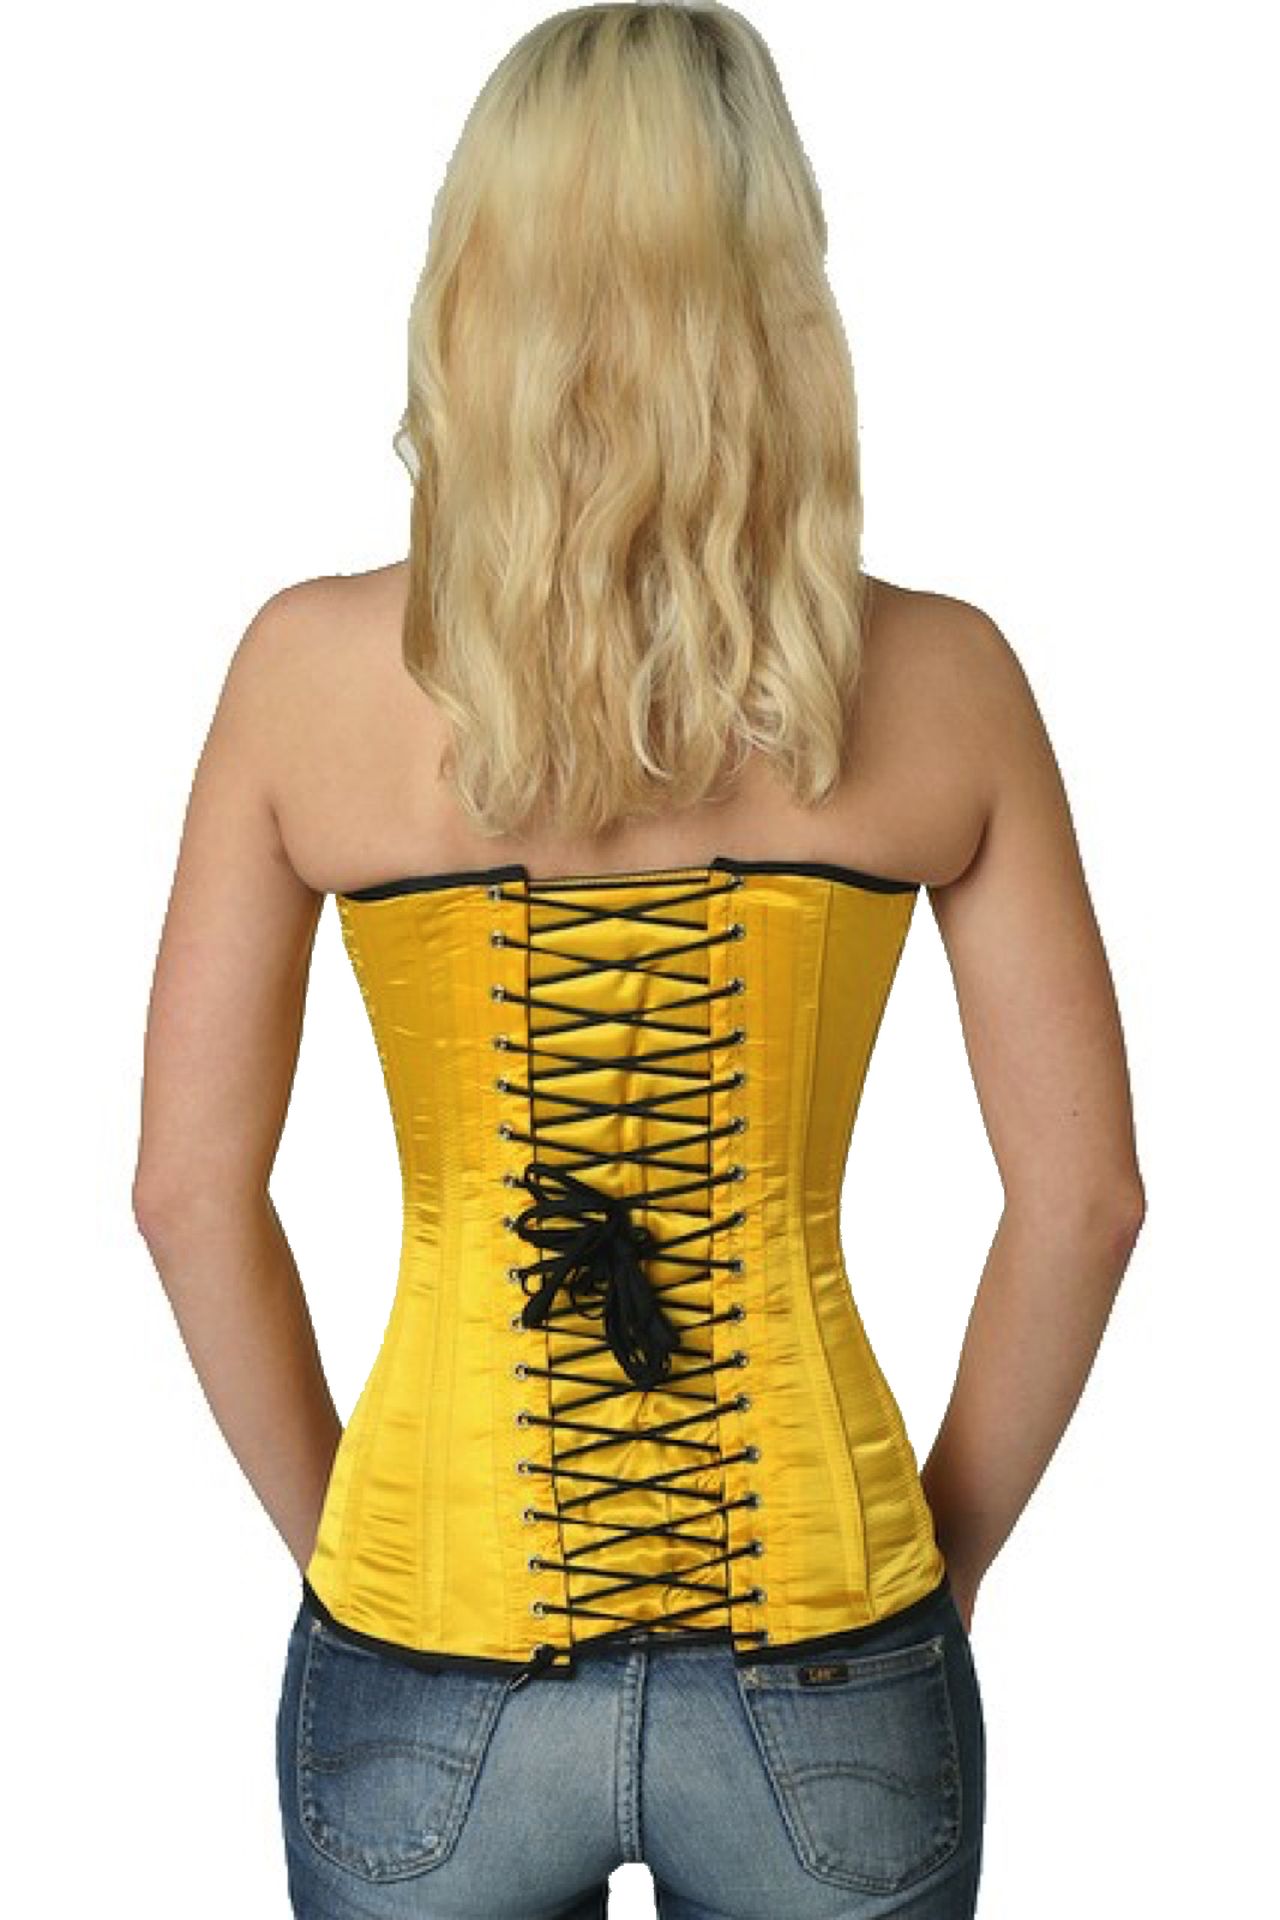 Corse amarillo mango raso sobre pecho corset sy13